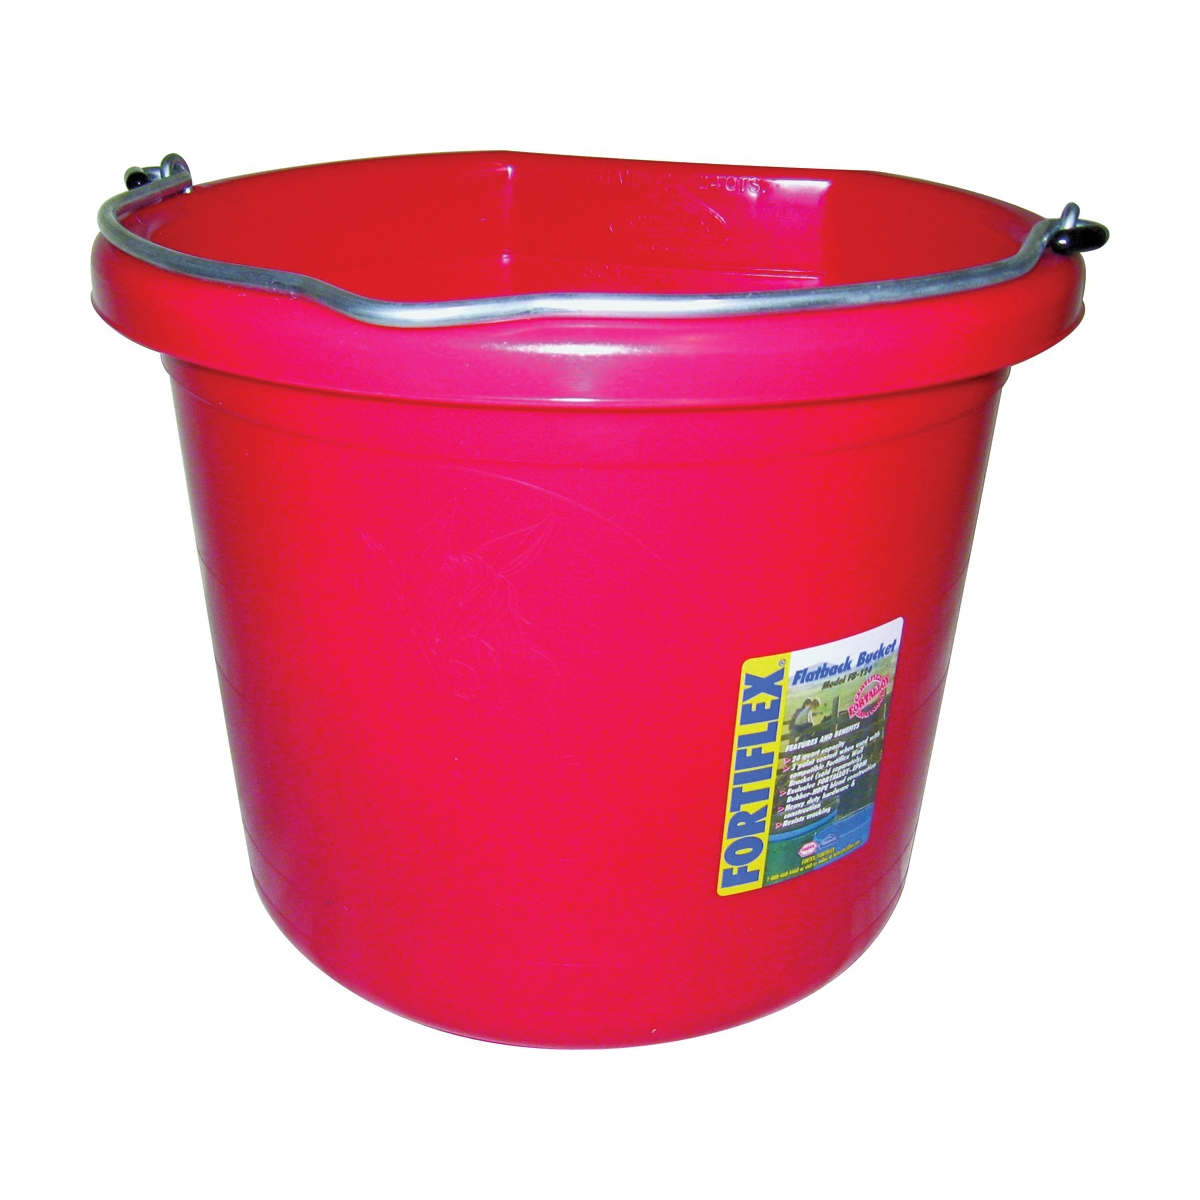 Fortex-Fortiflex FB-124 Series FB-124 R Bucket, 24 qt Volume, Rubber/Polyethylene, Red